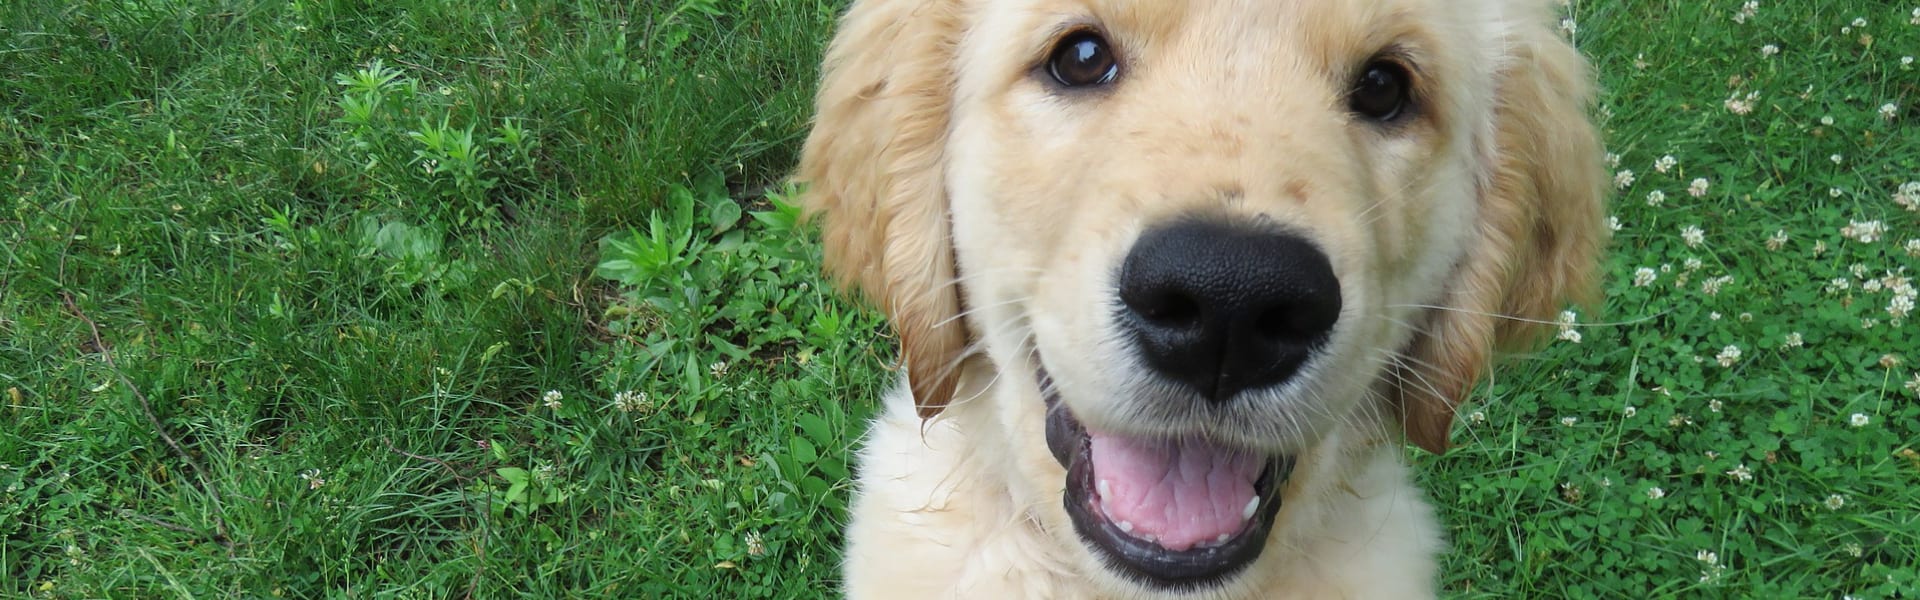 Puppy in grass - Positive reinforcement dog training